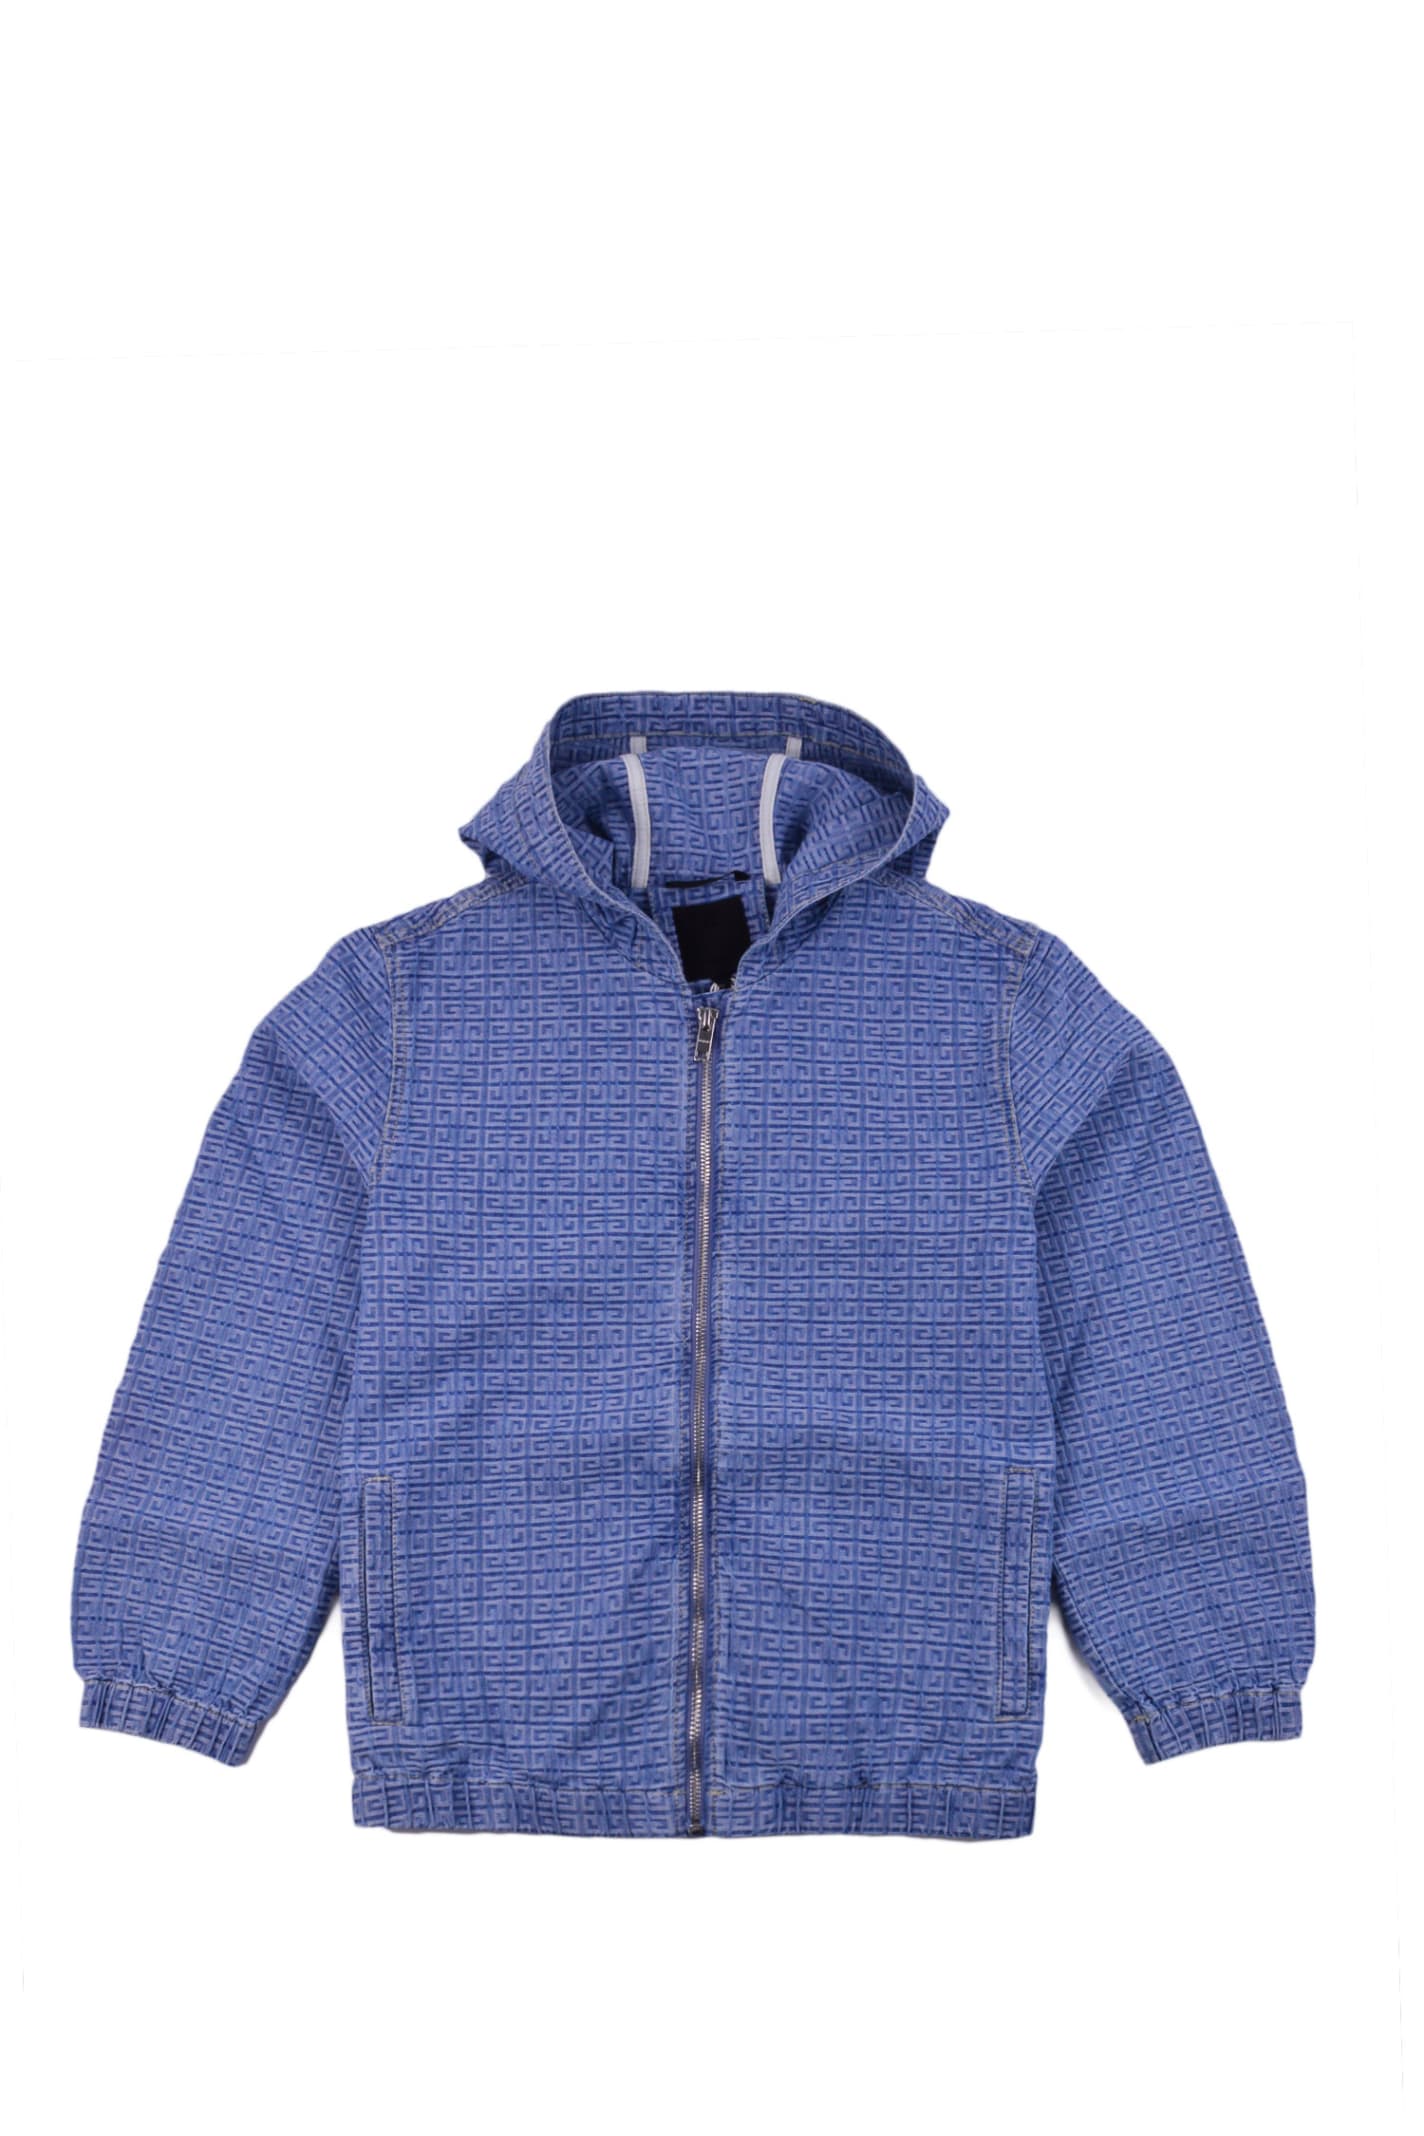 Givenchy Kids' Cotton Denim Jacket In Blue